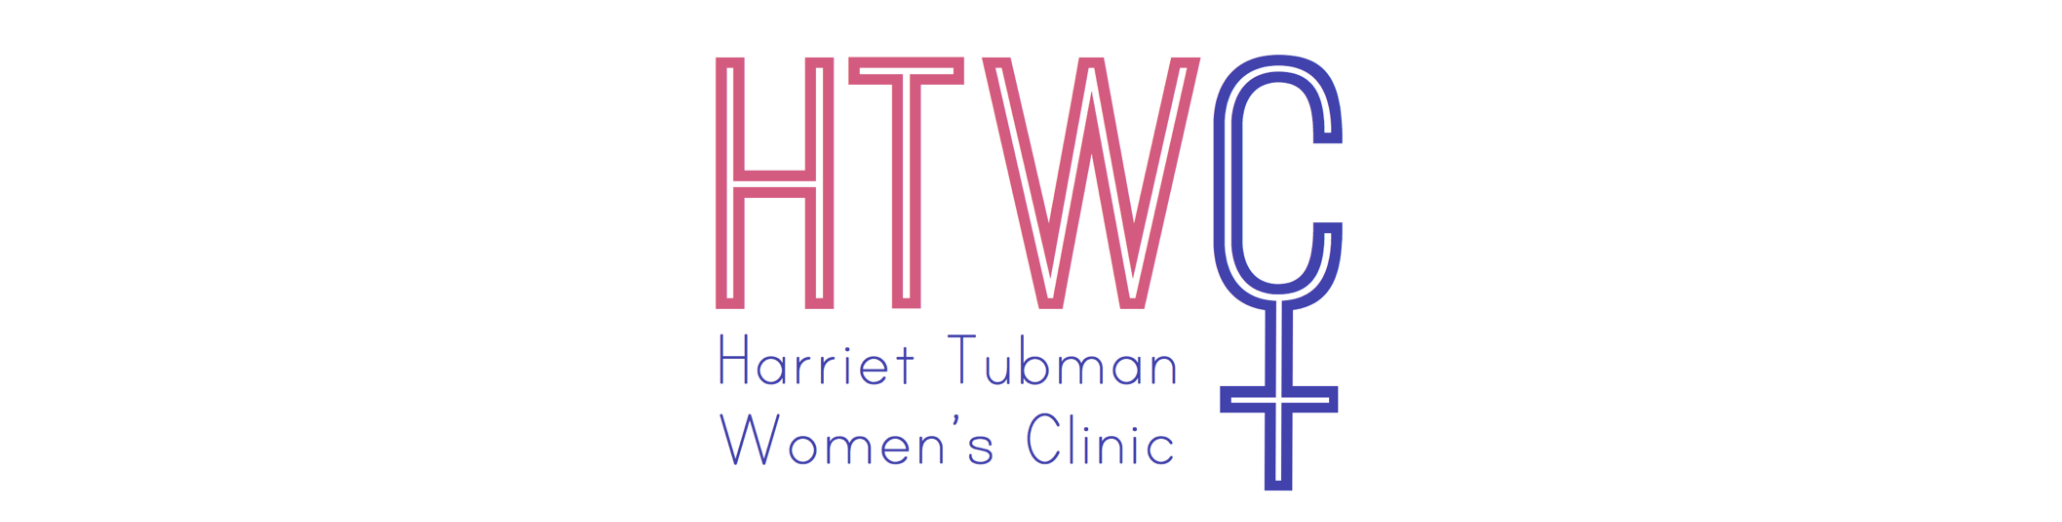 Harriet Tubman Women's Clinic